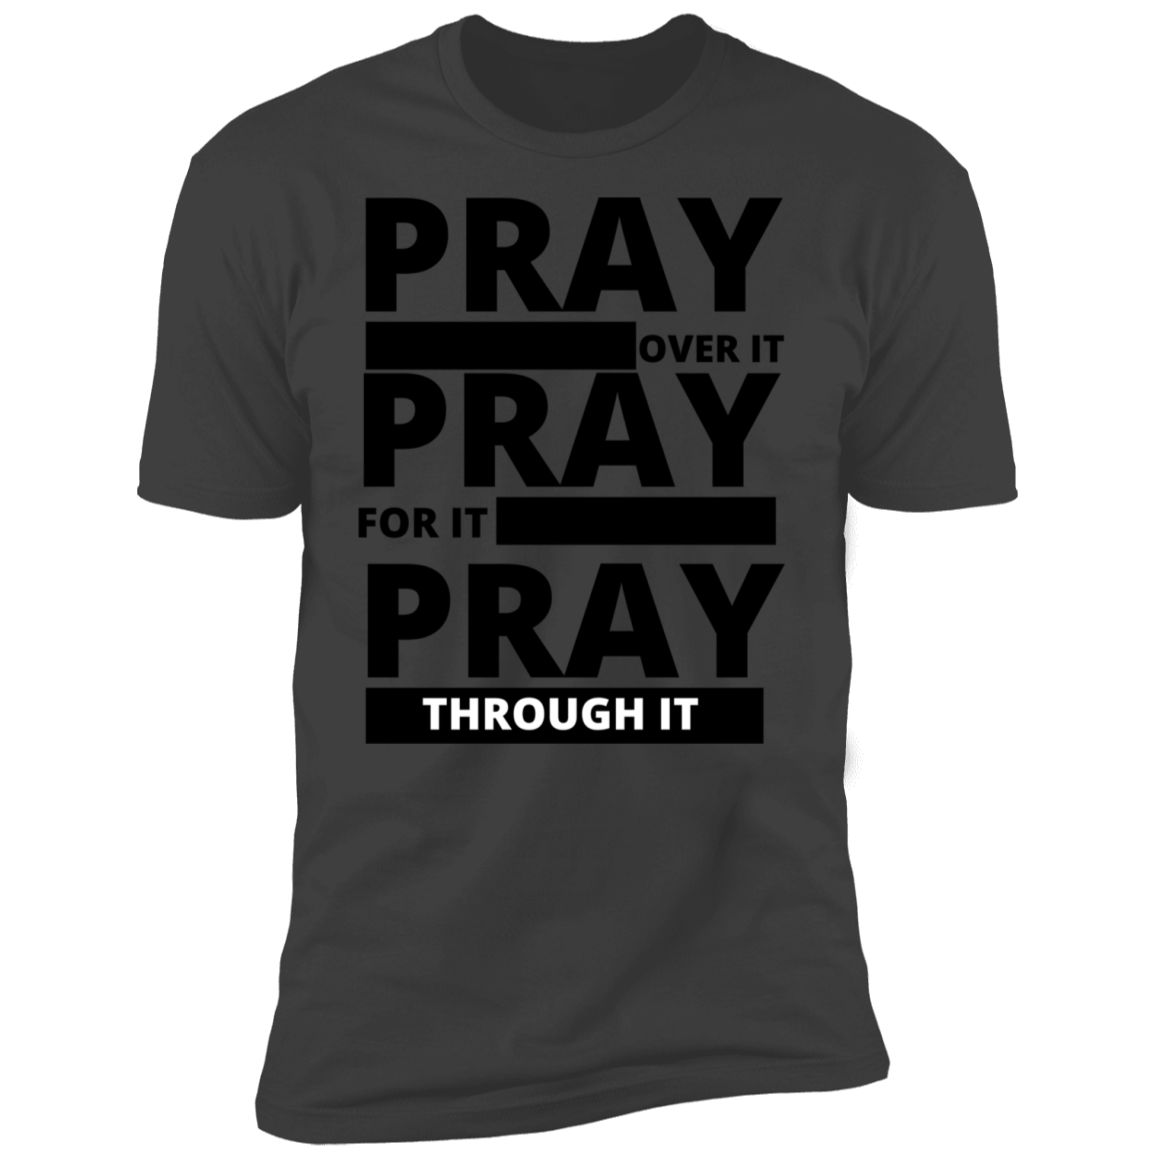 PRAY OVER IT PRAY FOR IT PRAY THROUGH IT SHIRT